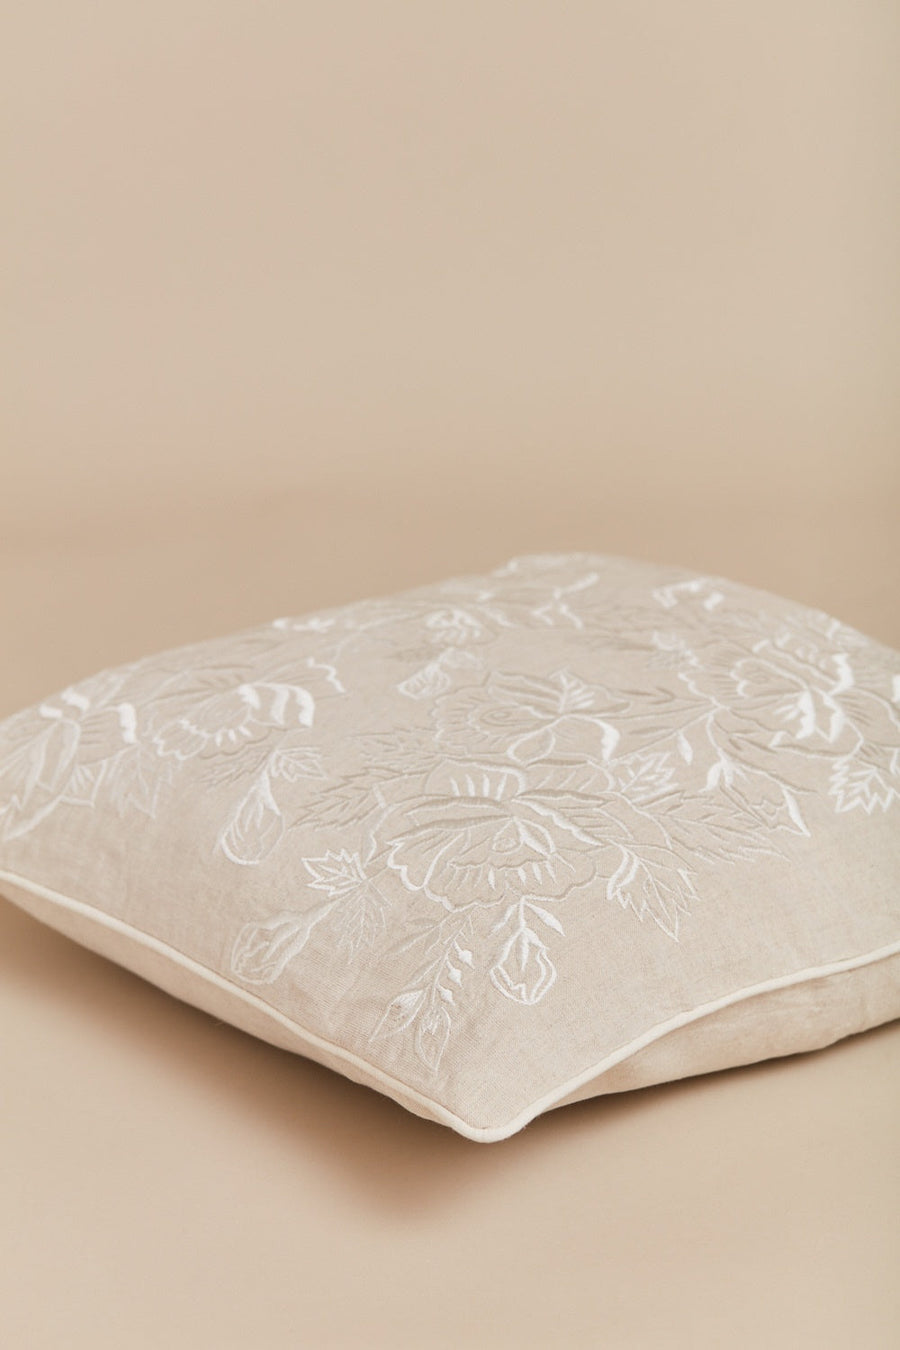 Cushion Cover Levity (45cm x 45cm)